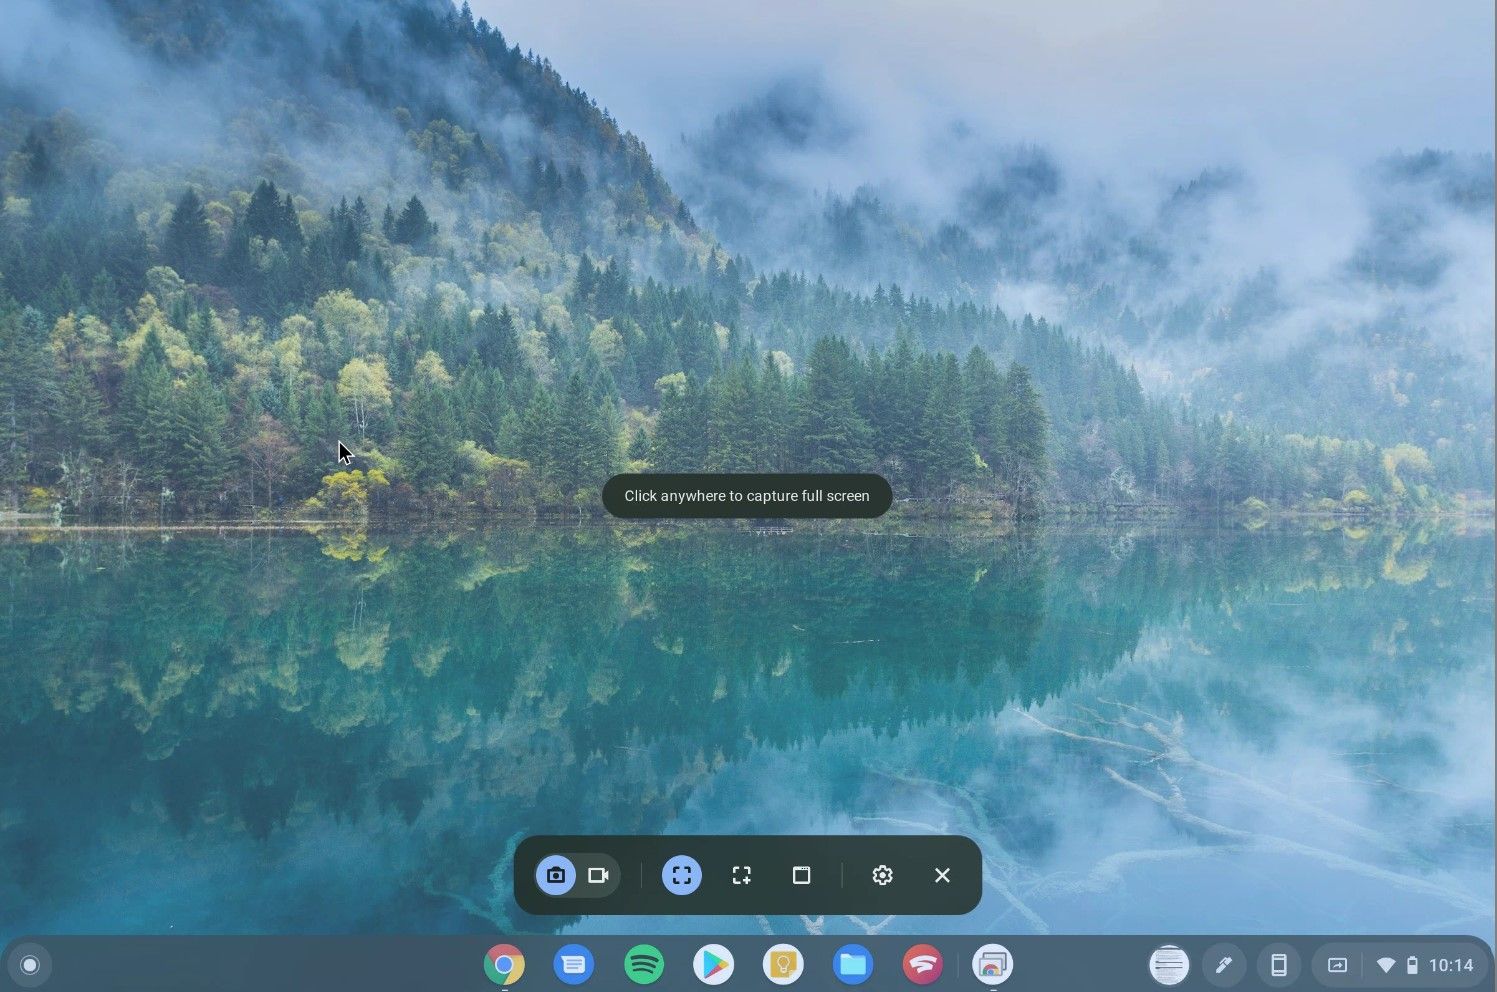 The Chrome OS Screen Capture tool for fullscreen screenshot.